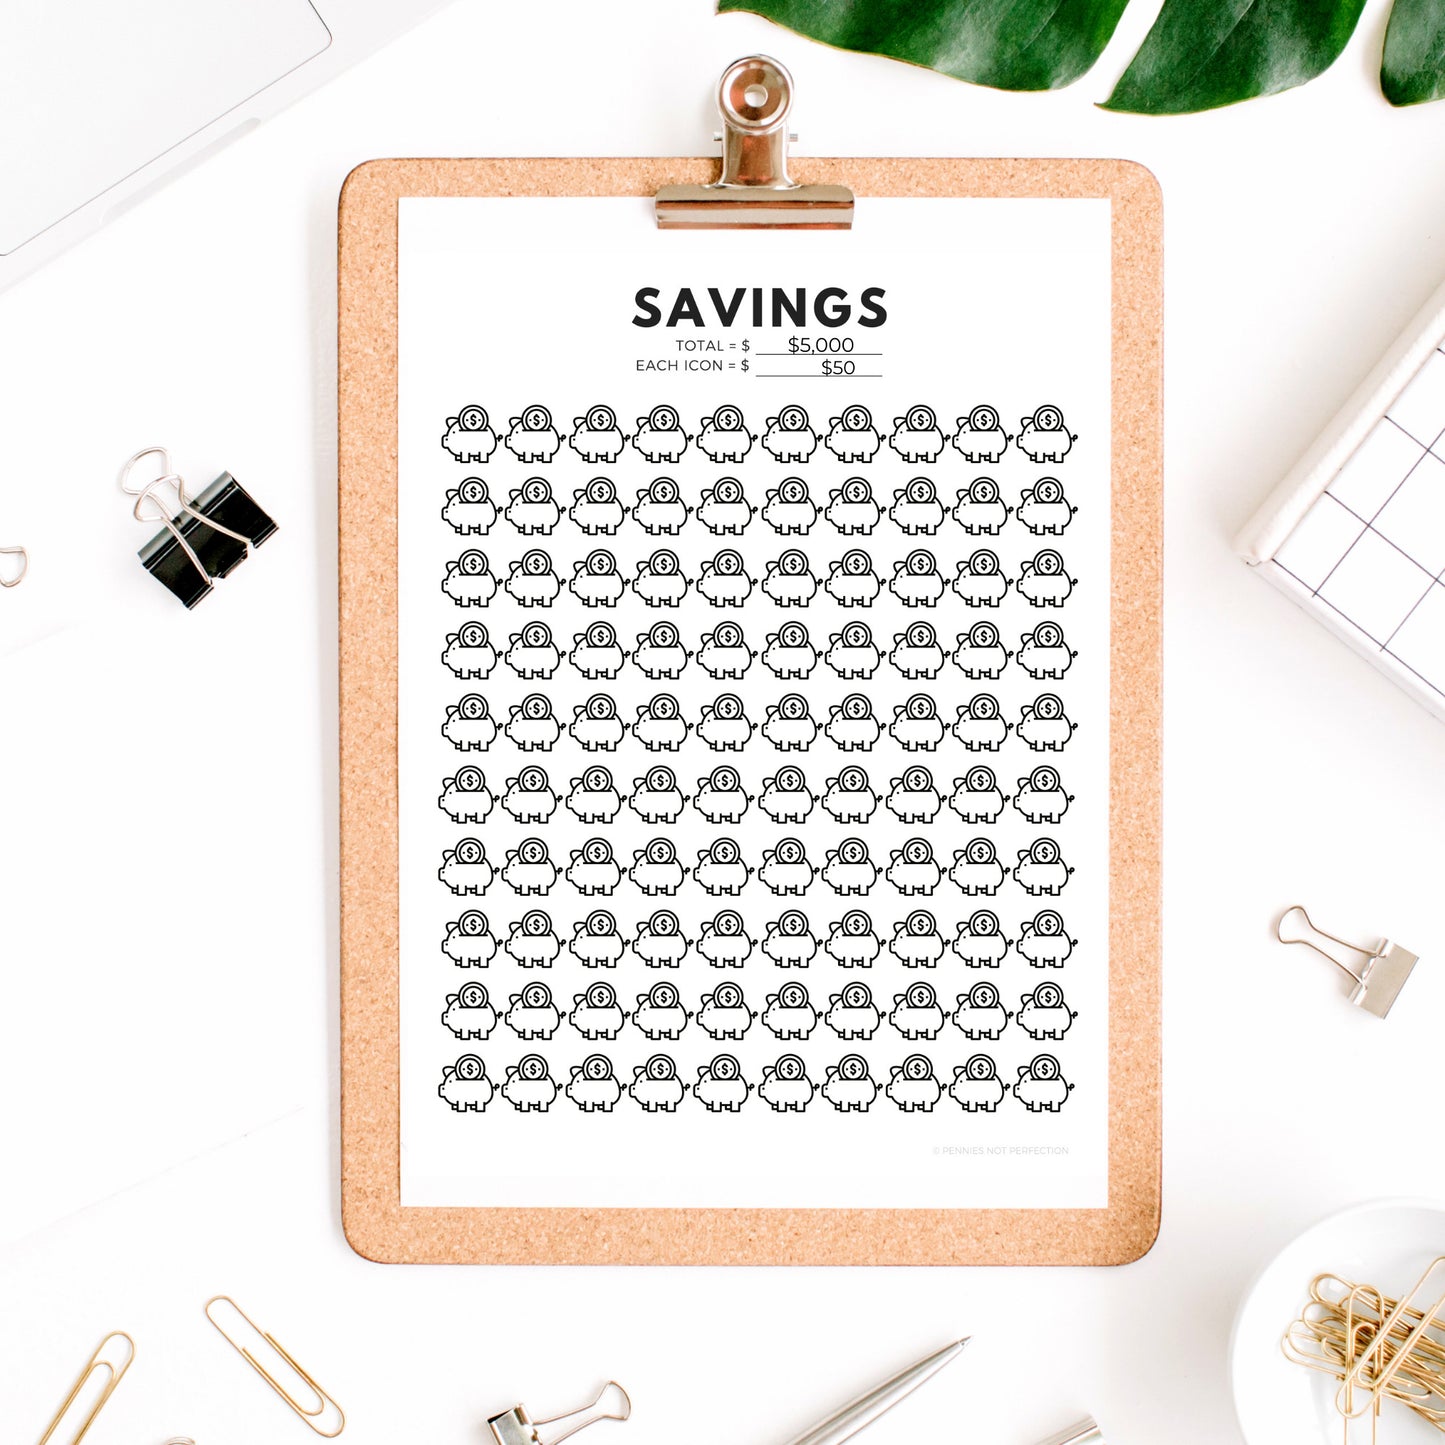 Savings Goal Tracker | Piggy Bank Savings Tracker Printable 6